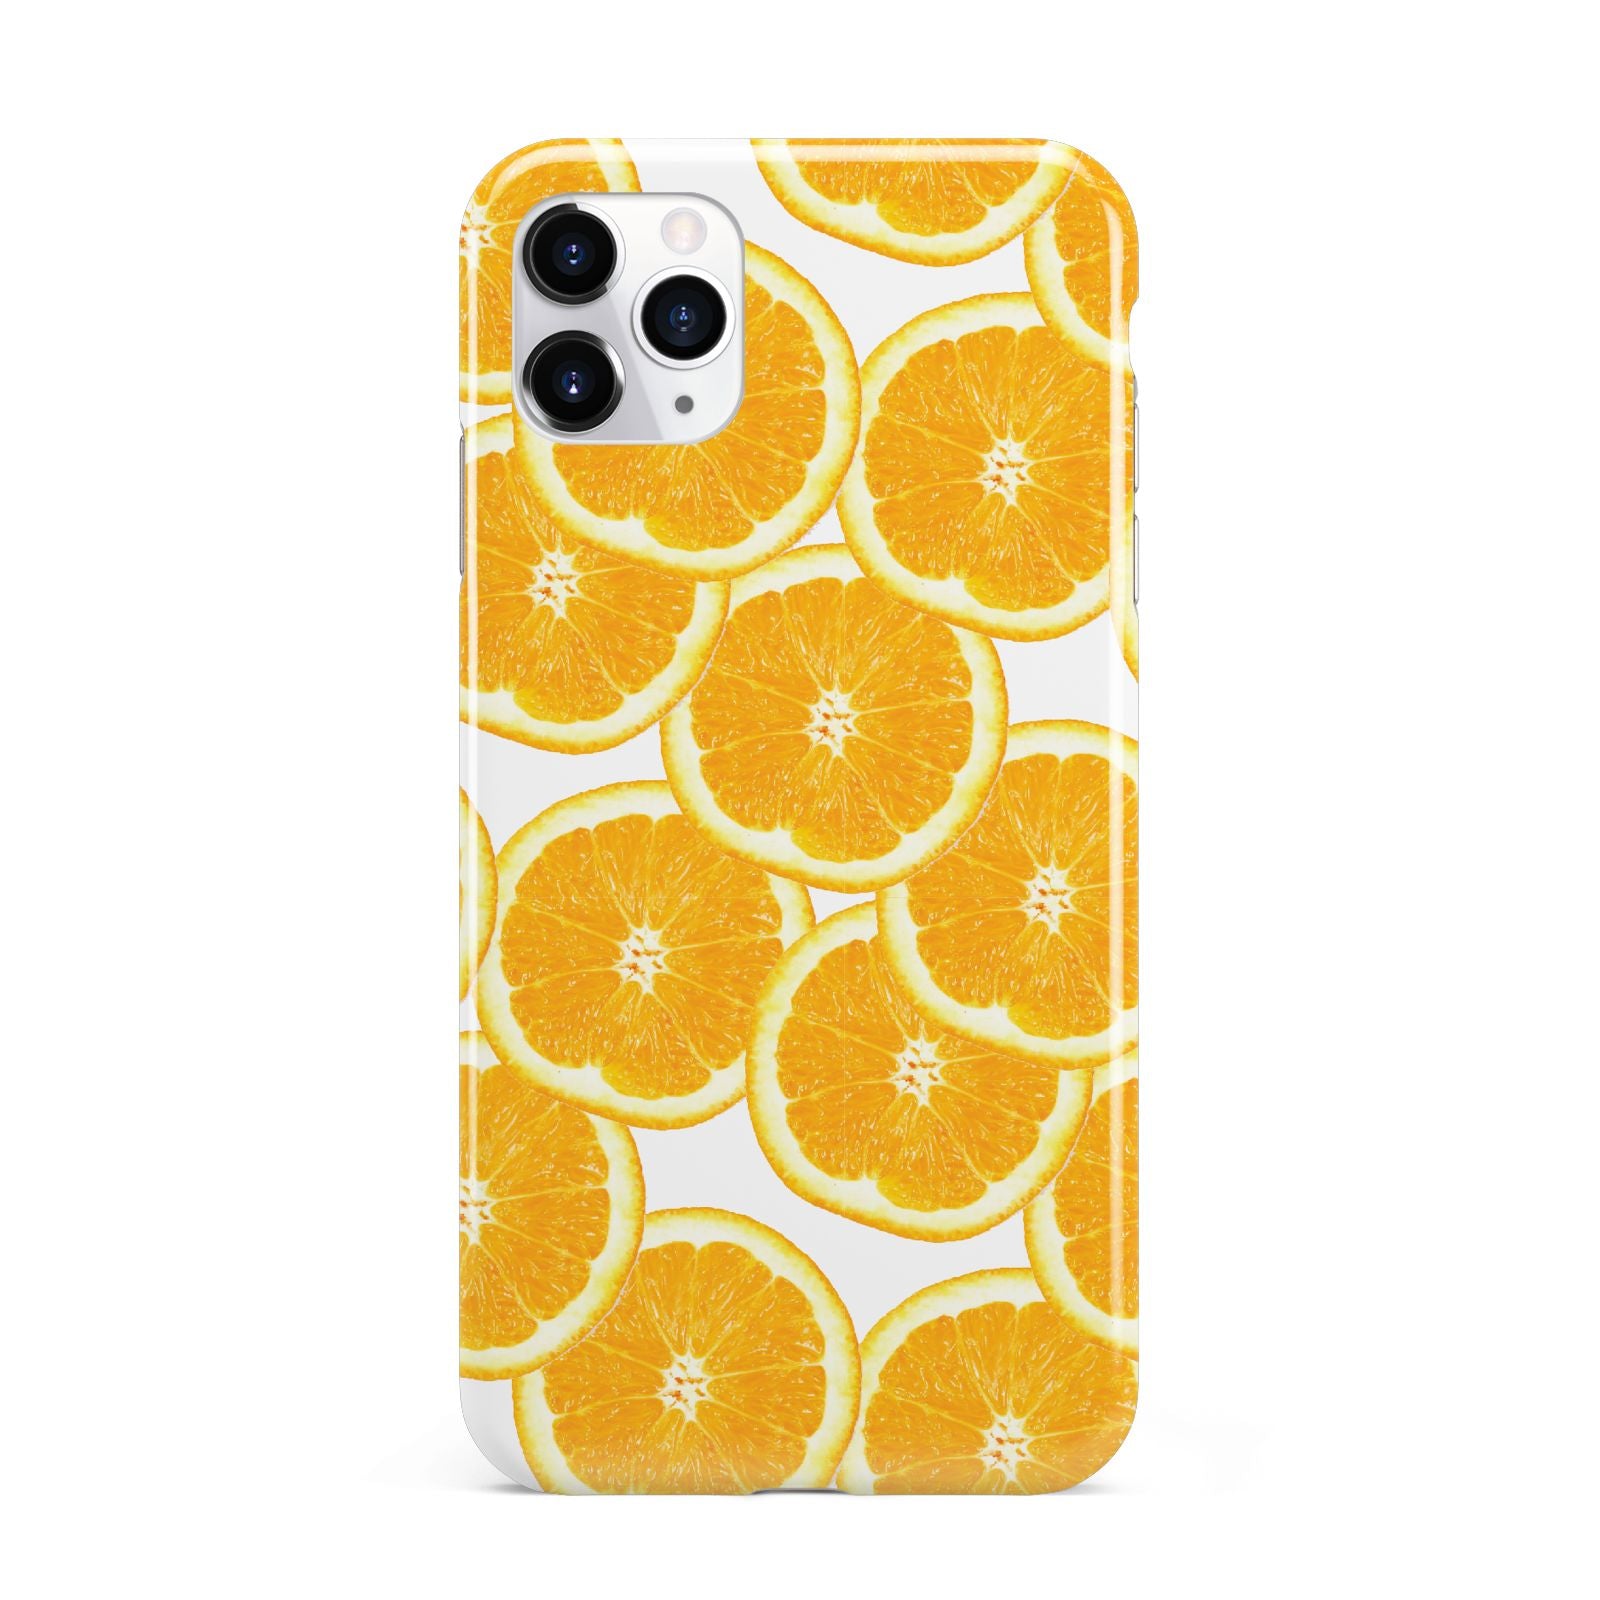 Orange Fruit Slices iPhone 11 Pro Max 3D Tough Case